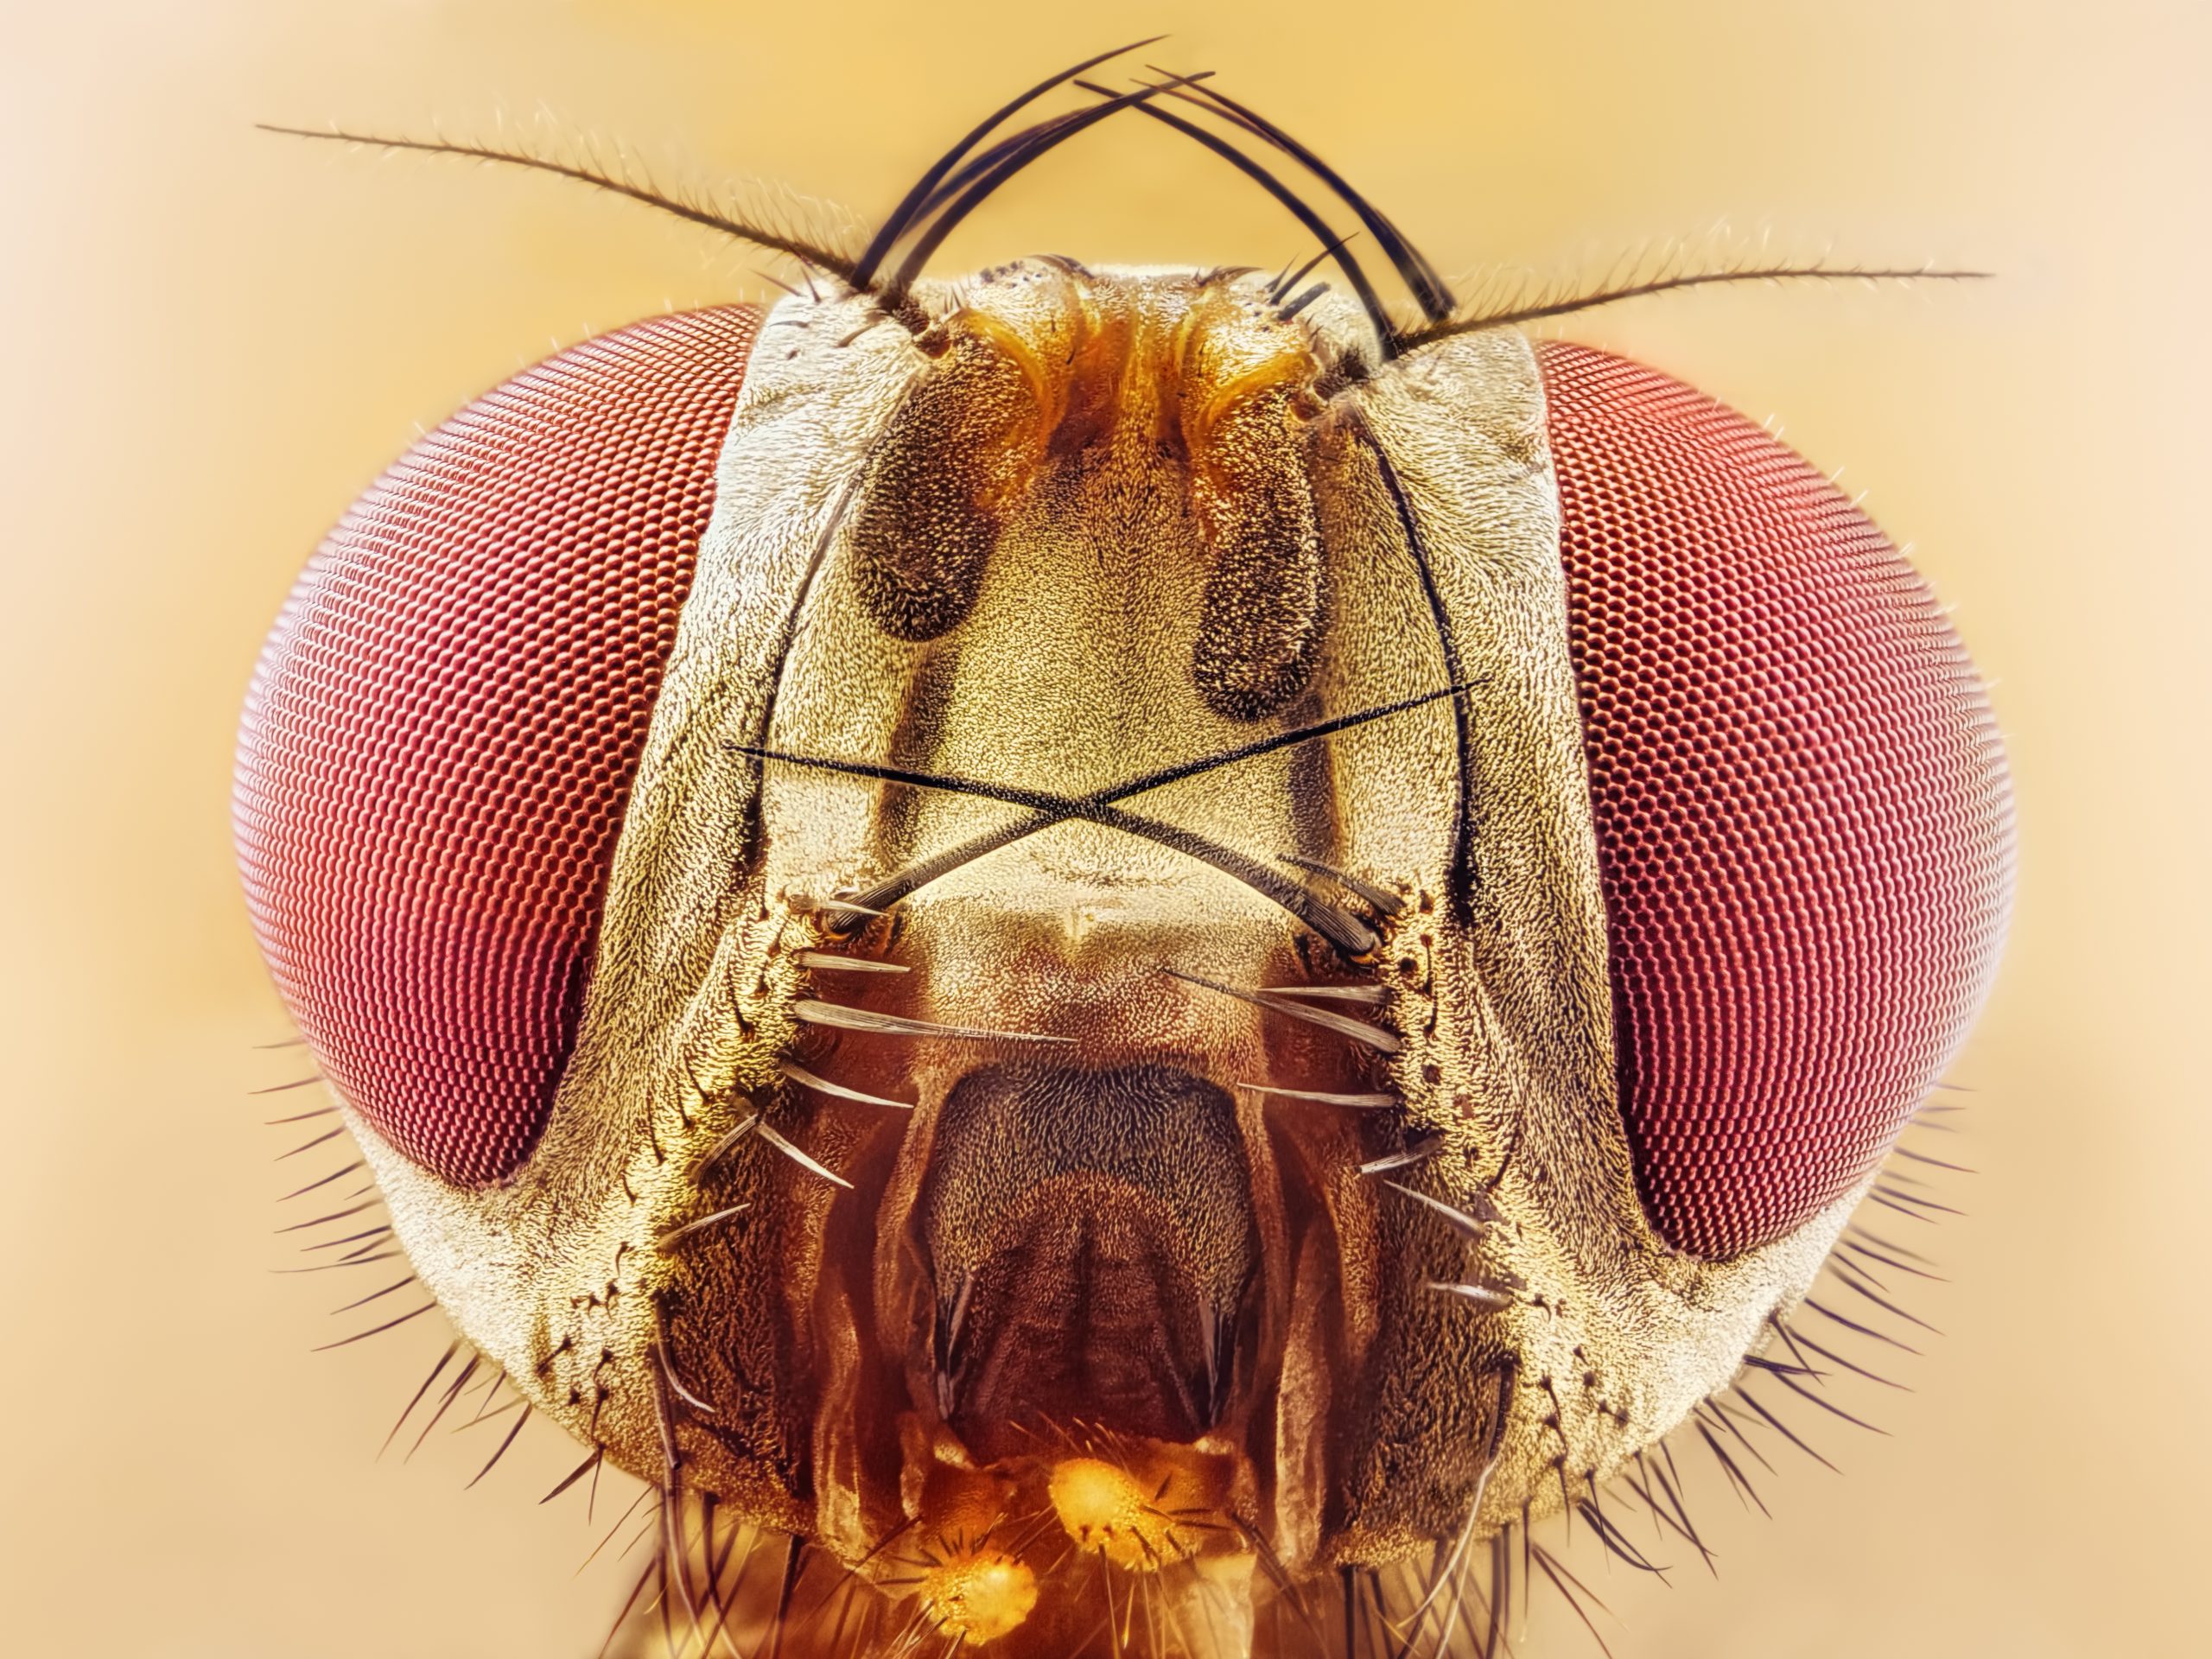 An extreme close-up of a Fruit Fly. Depositphotos.